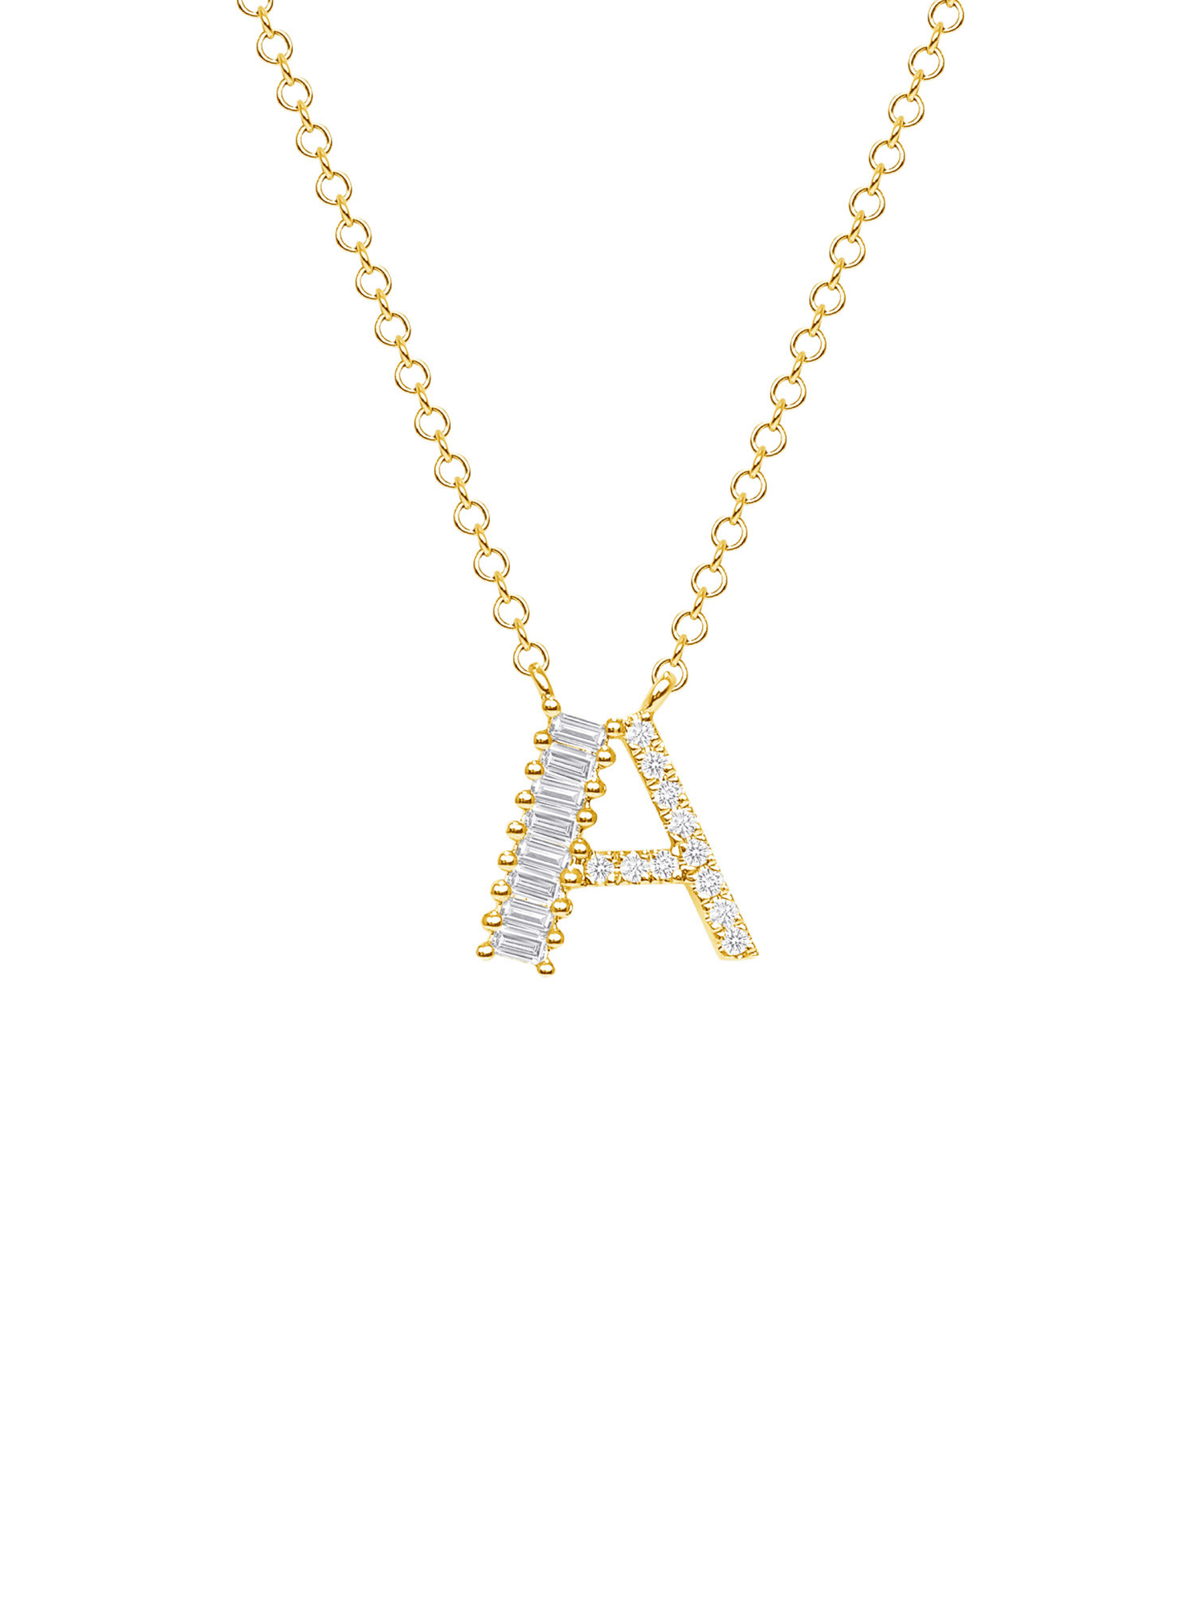 Diamond pendant necklace gold